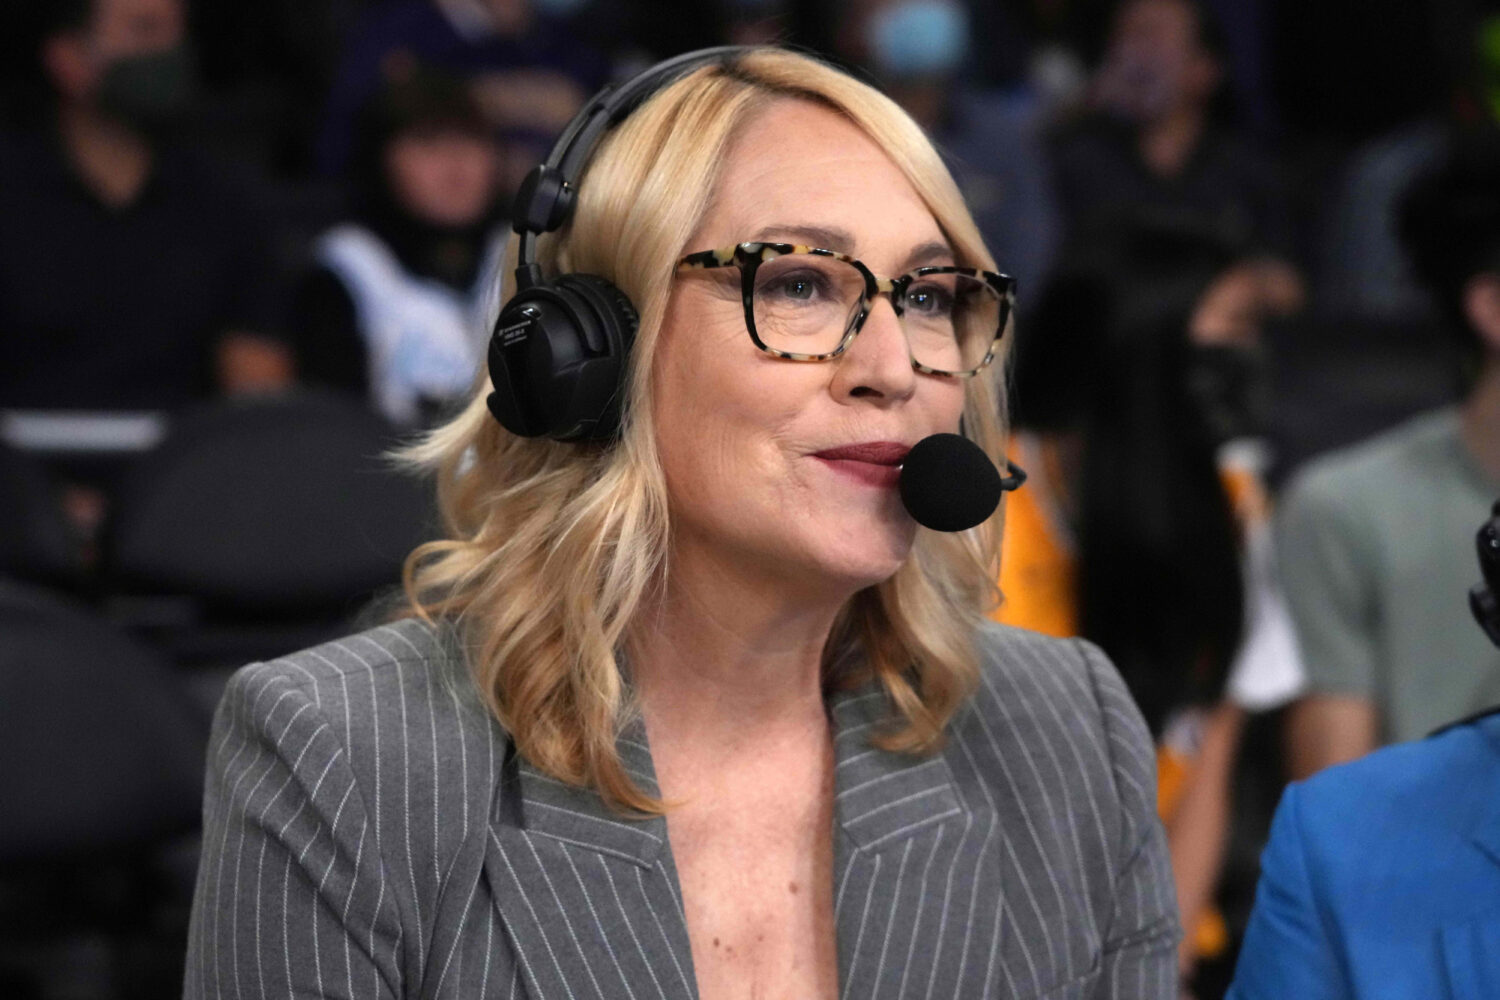 NBA Analyst Doris Burke Is Blazing a Trail in Sportscasting